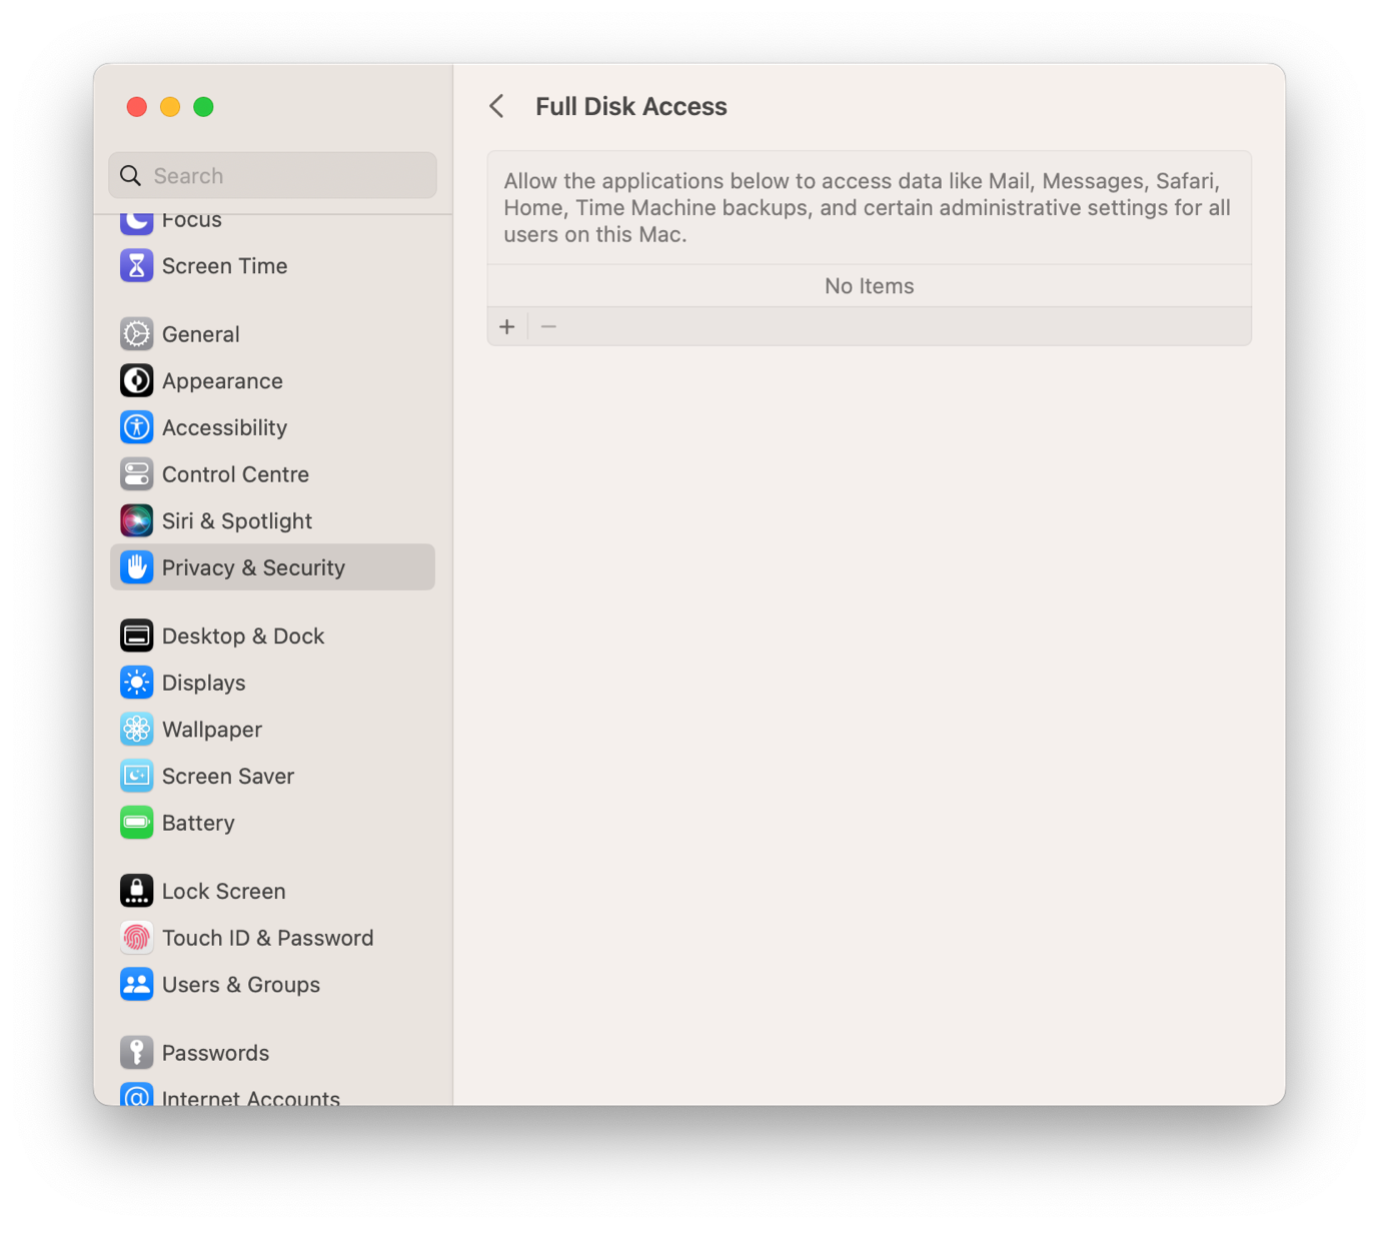 The Full Disk Access menu in System Settings on macOS Ventura